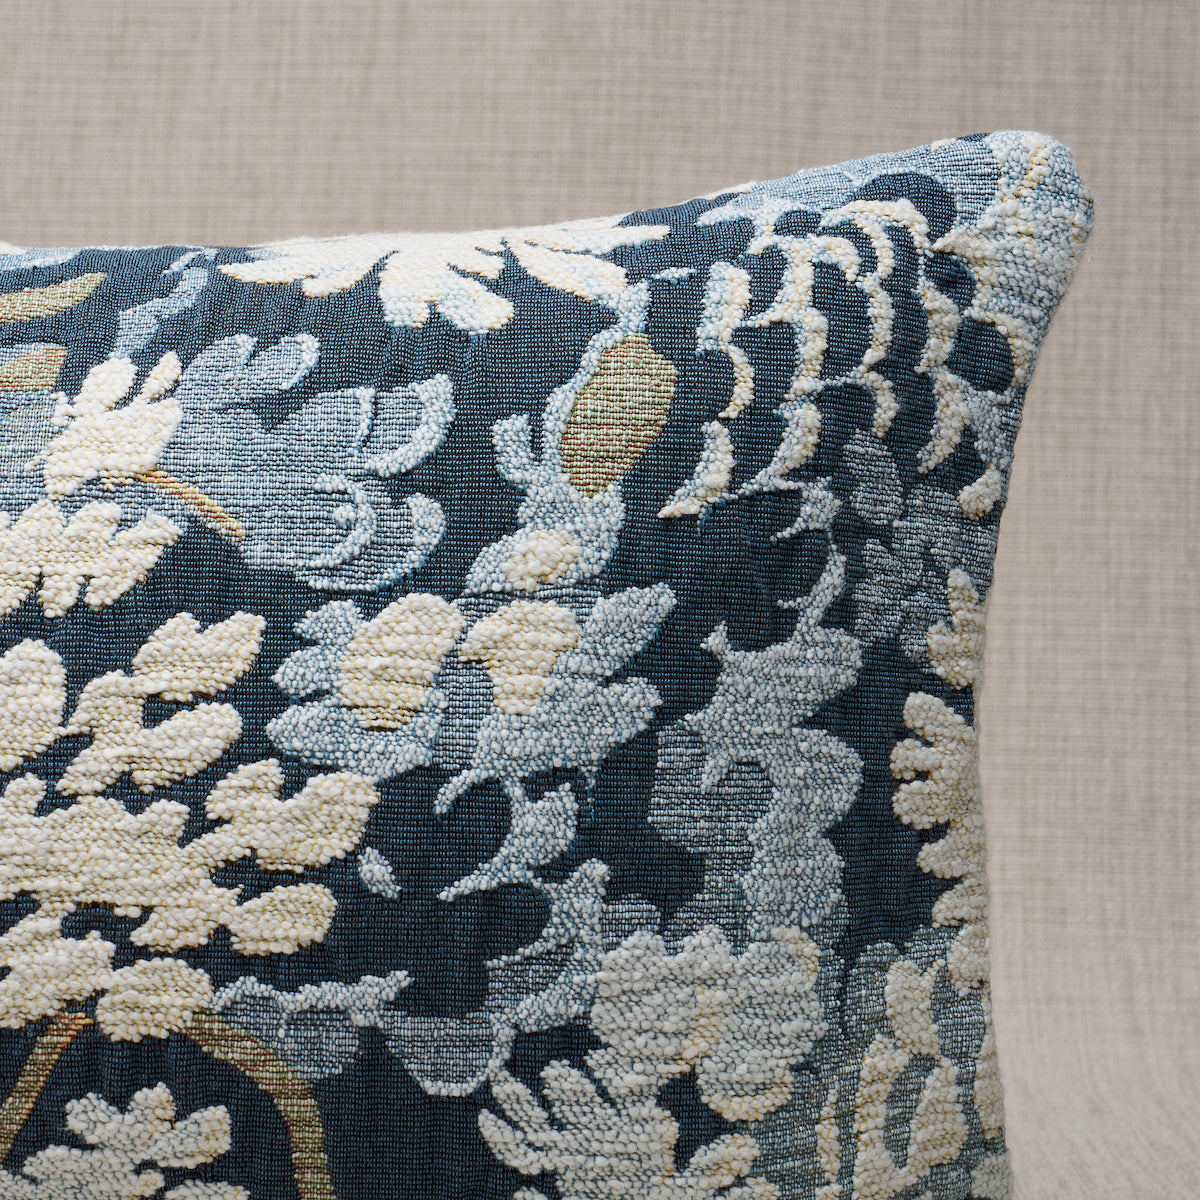 Verdure Tapestry Pillow | Blue